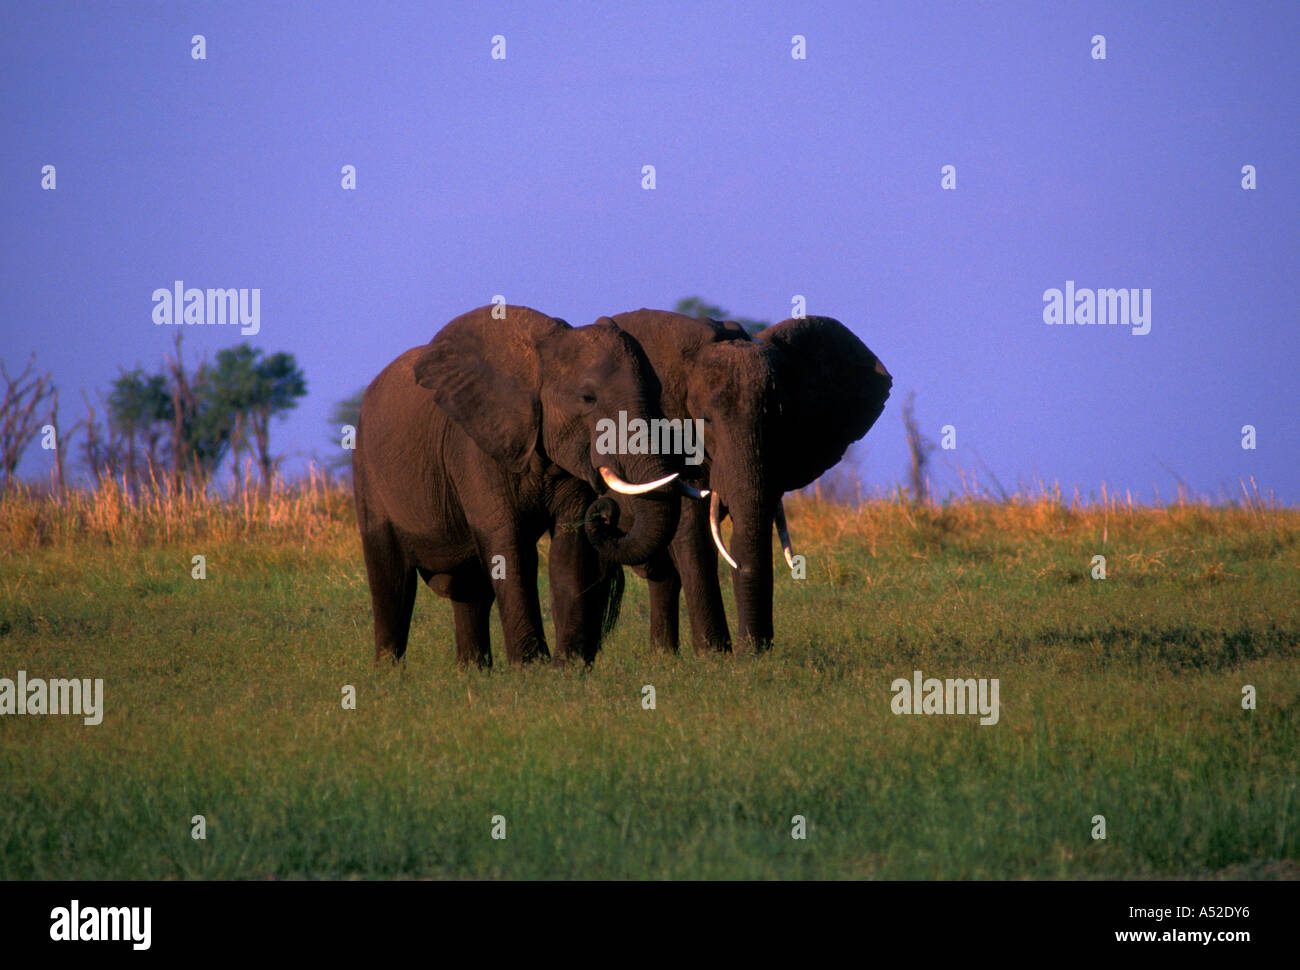 Elefante africano Loxodonta africana, Bumi area collinare, il lago Kariba, Mashonaland occidentale provincia, Zimbabwe Foto Stock